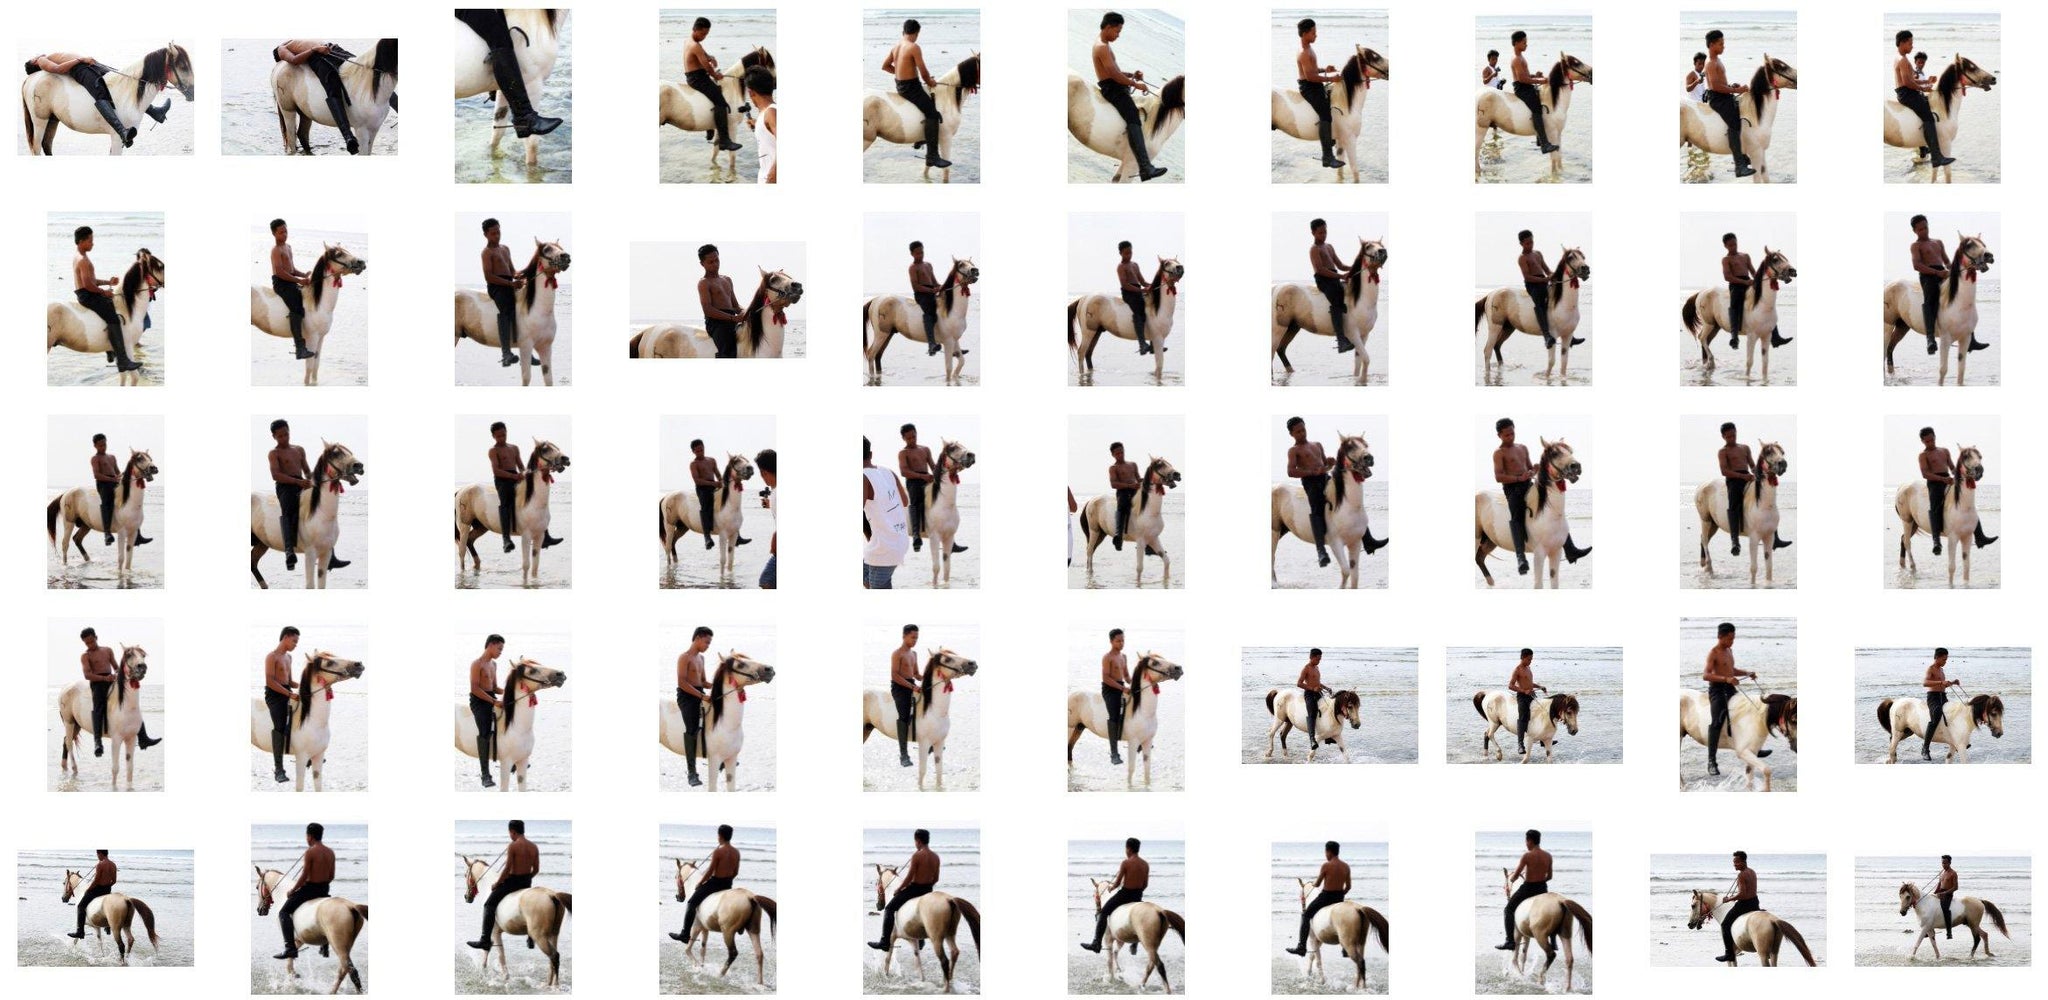 Emas in Jodhpurs and Ridingboots Riding Bareback on Buckskin Horse, Part 3 - Riding.Vision